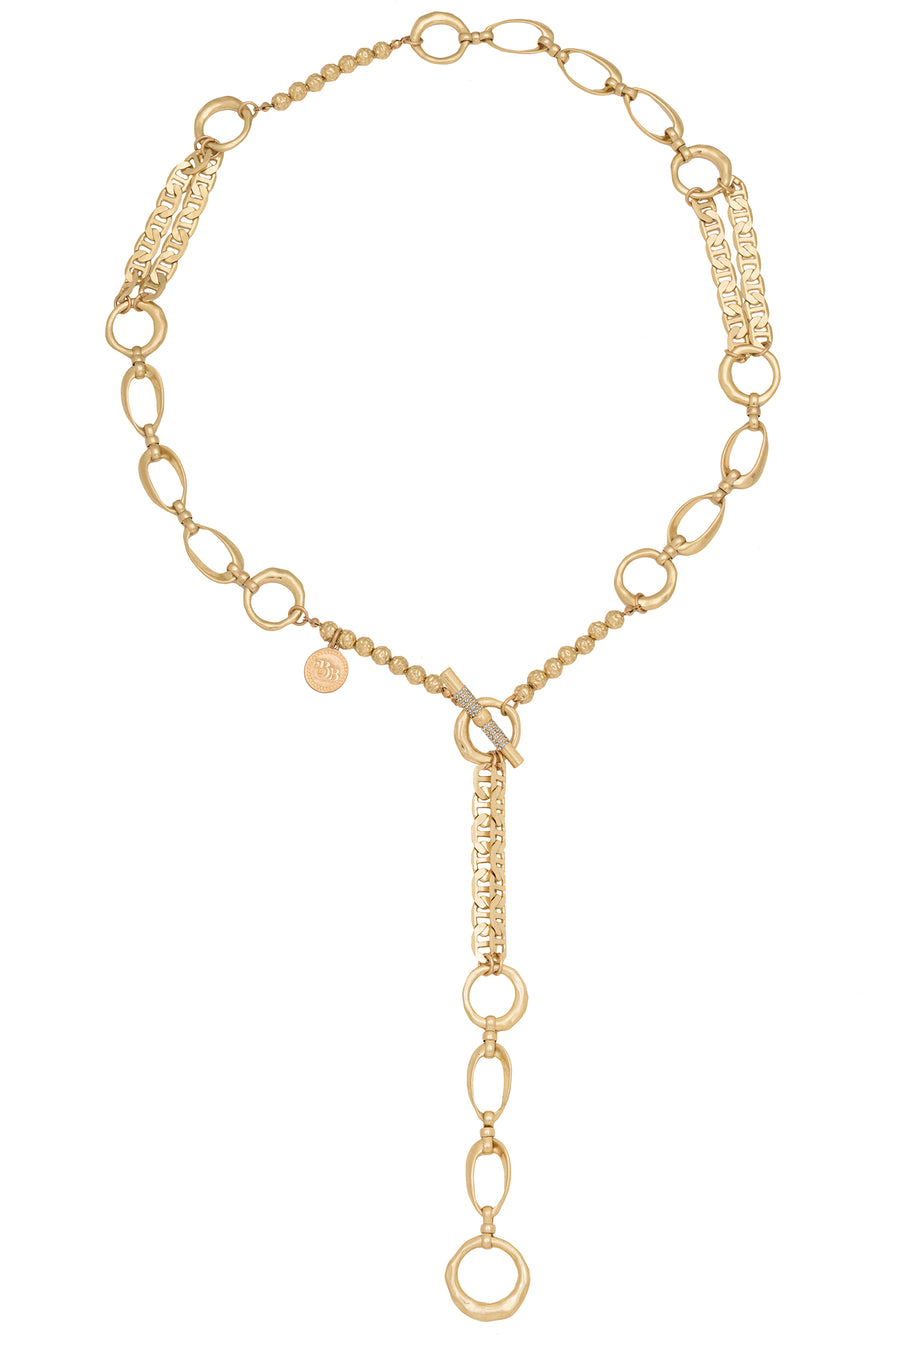 Bibi Bijoux Gold Chunky Necklace